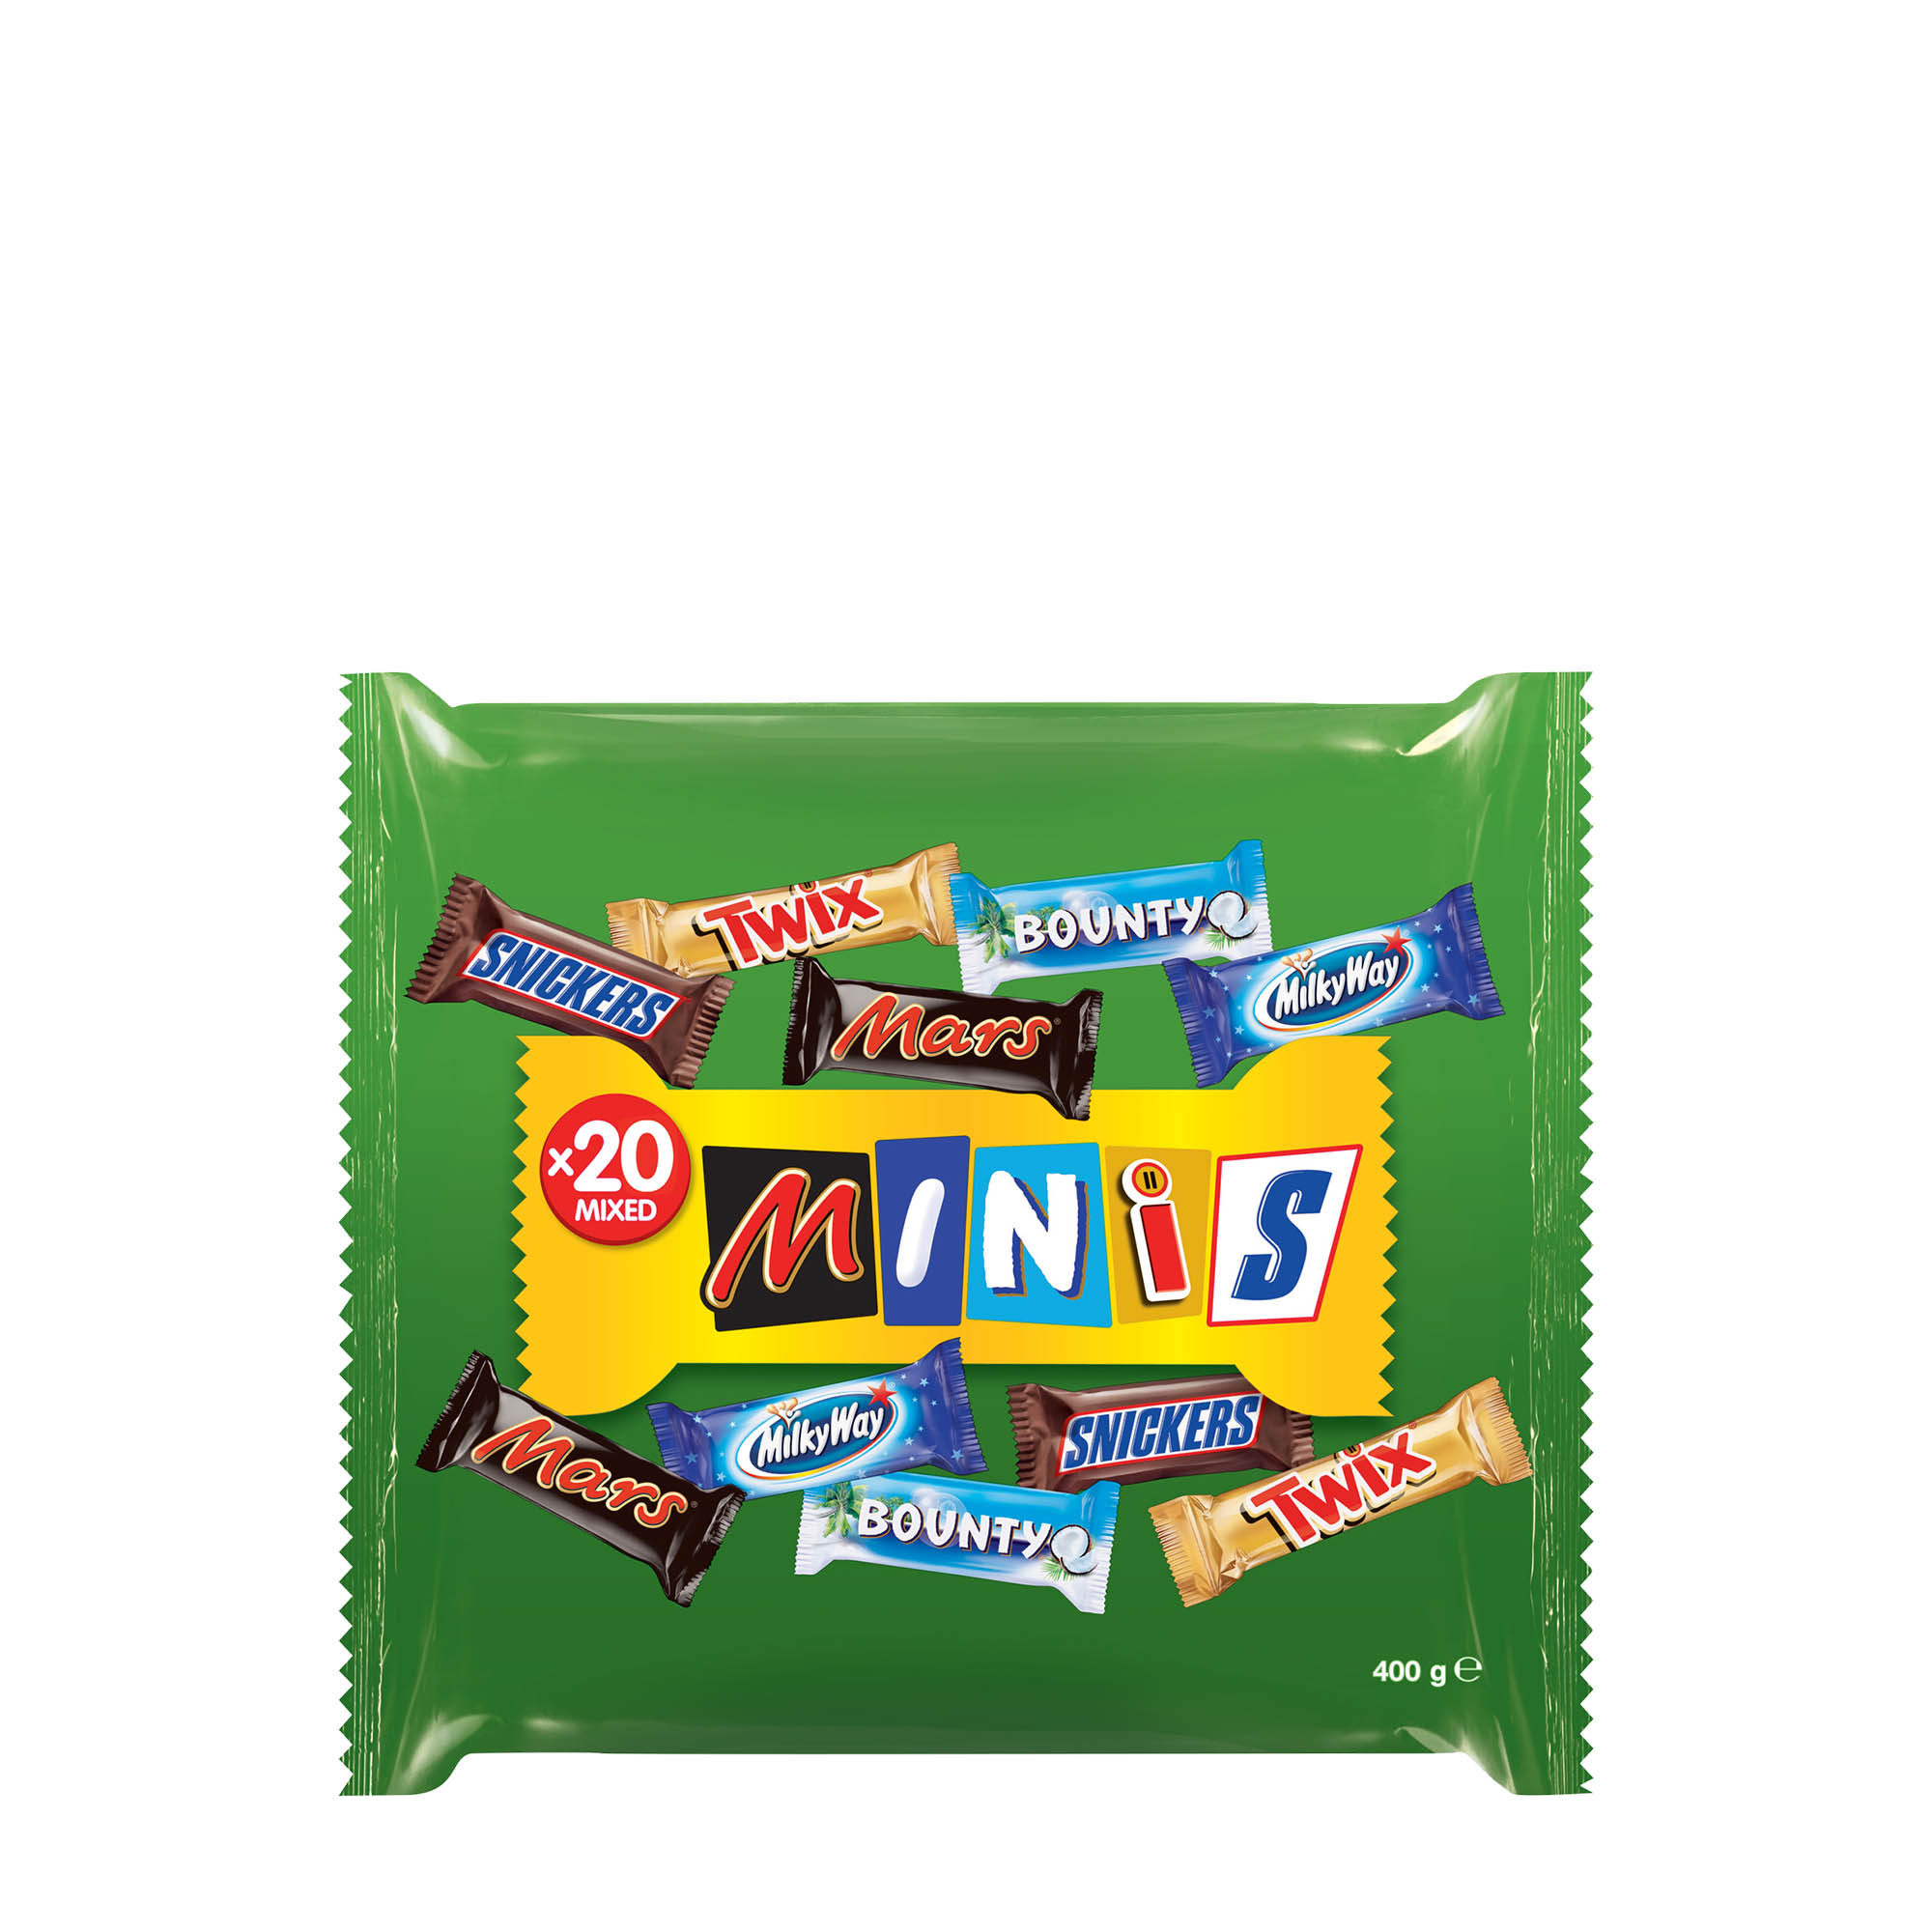 Mars Milk Chocolate Bars minis candy cream & caramel, 14 Ct, 275 g –  Peppery Spot